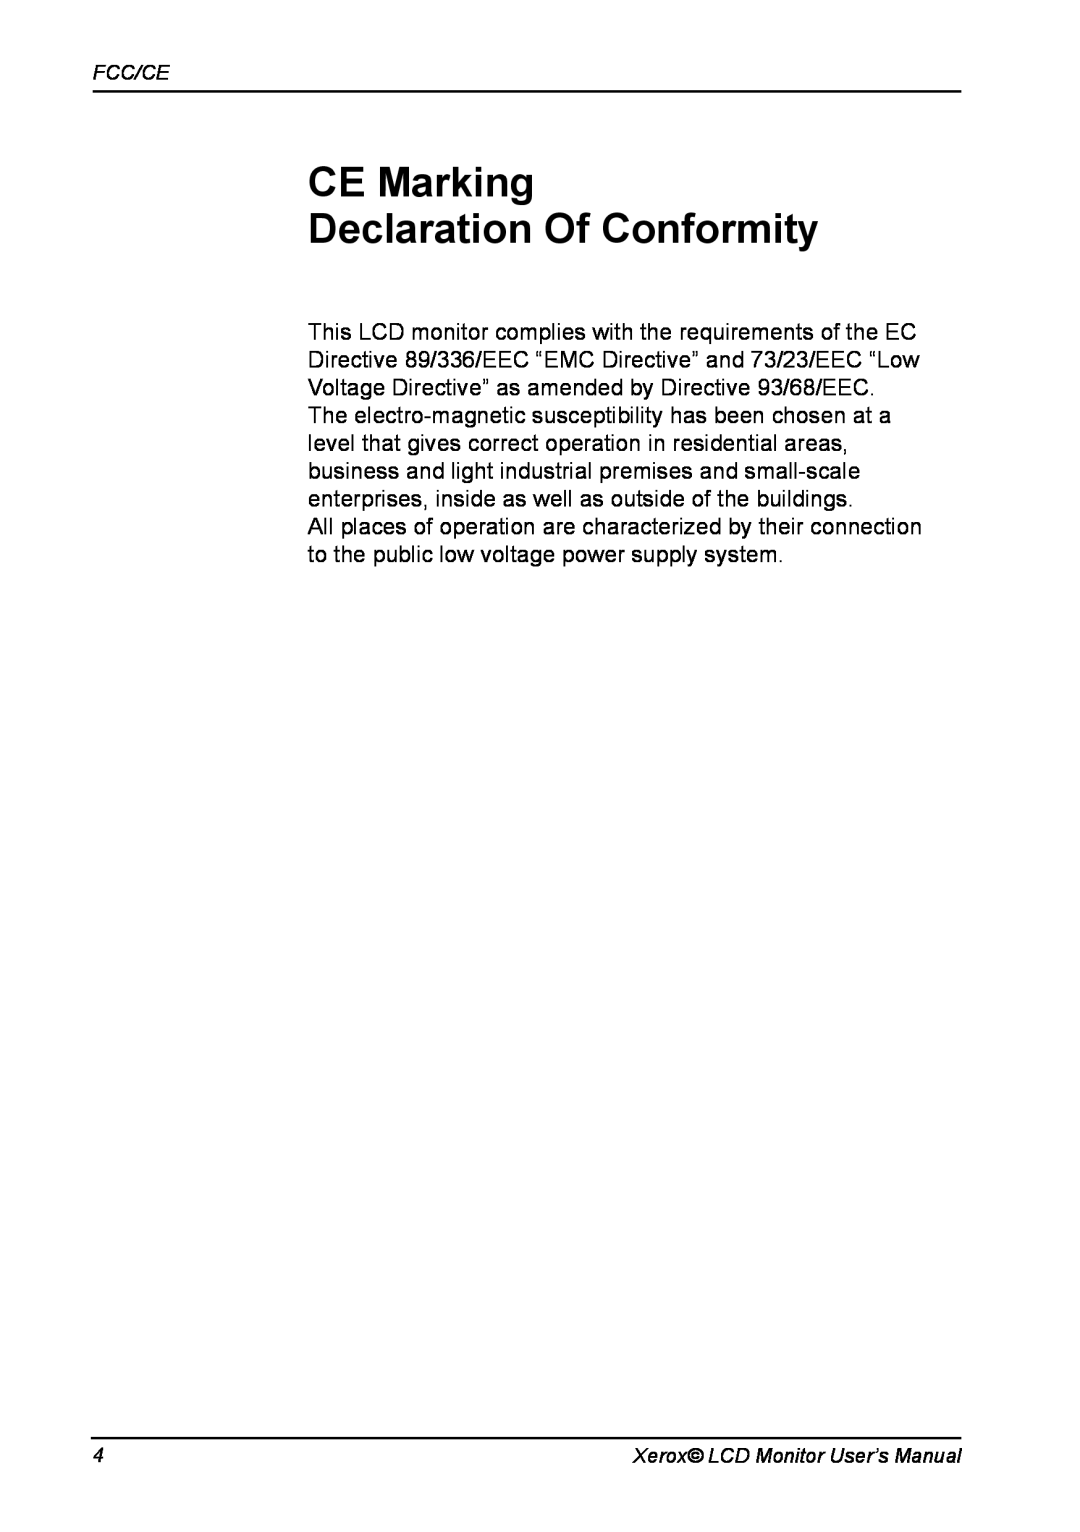 Xerox XM7-19w manual CE Marking Declaration Of Conformity, Fcc/Ce 